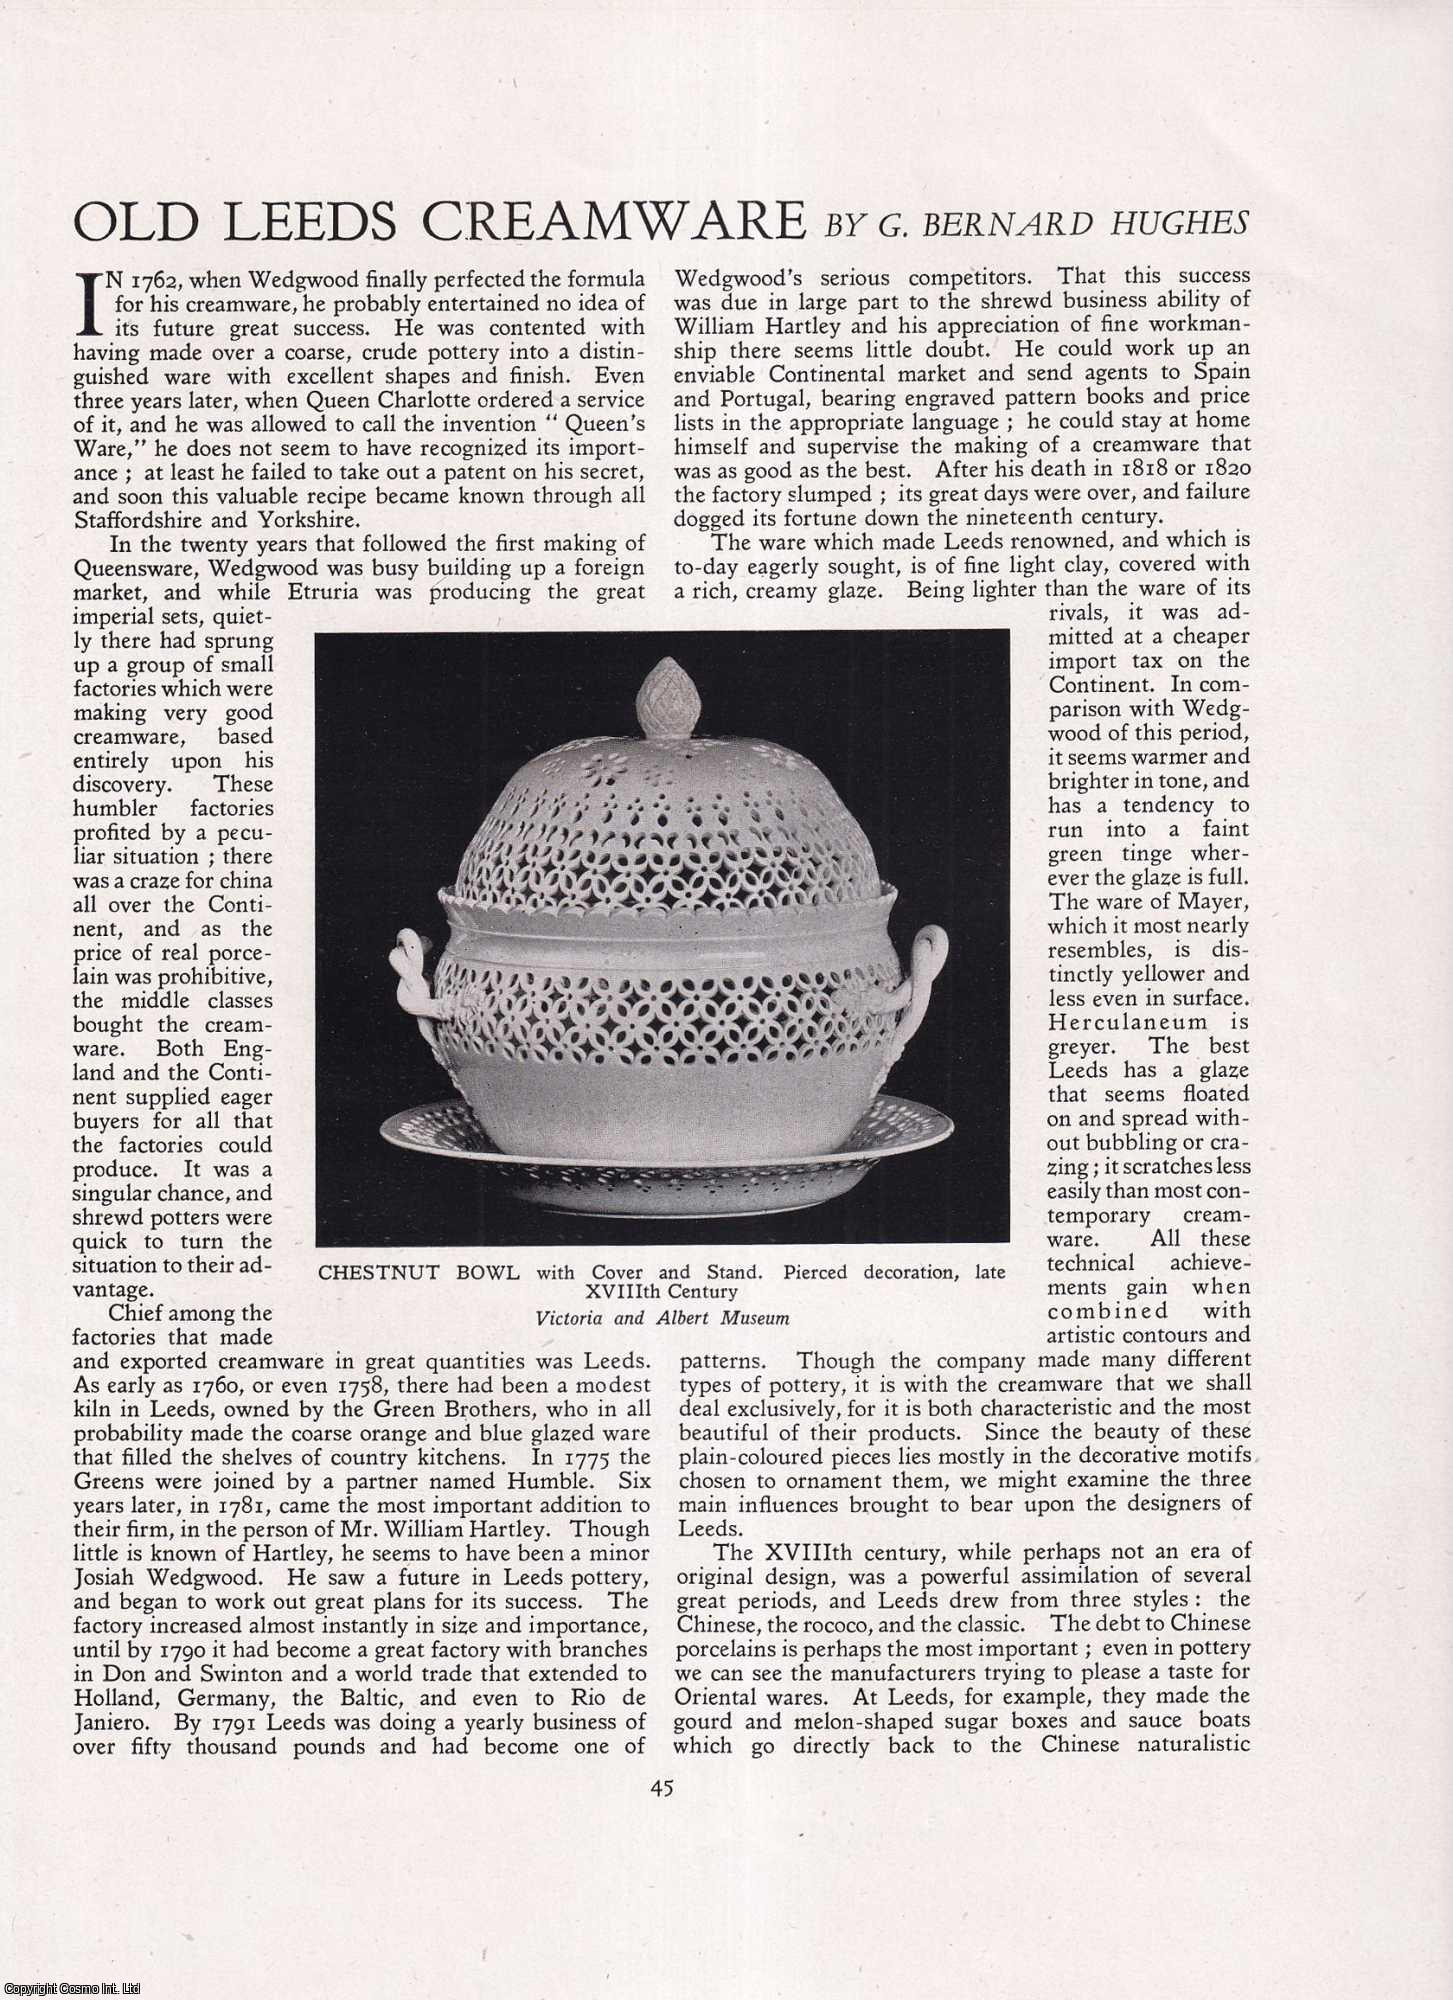 G. Bernard Hughes - Old Leeds Creamware. An original article from Apollo, International Magazine of the Arts, 1943.